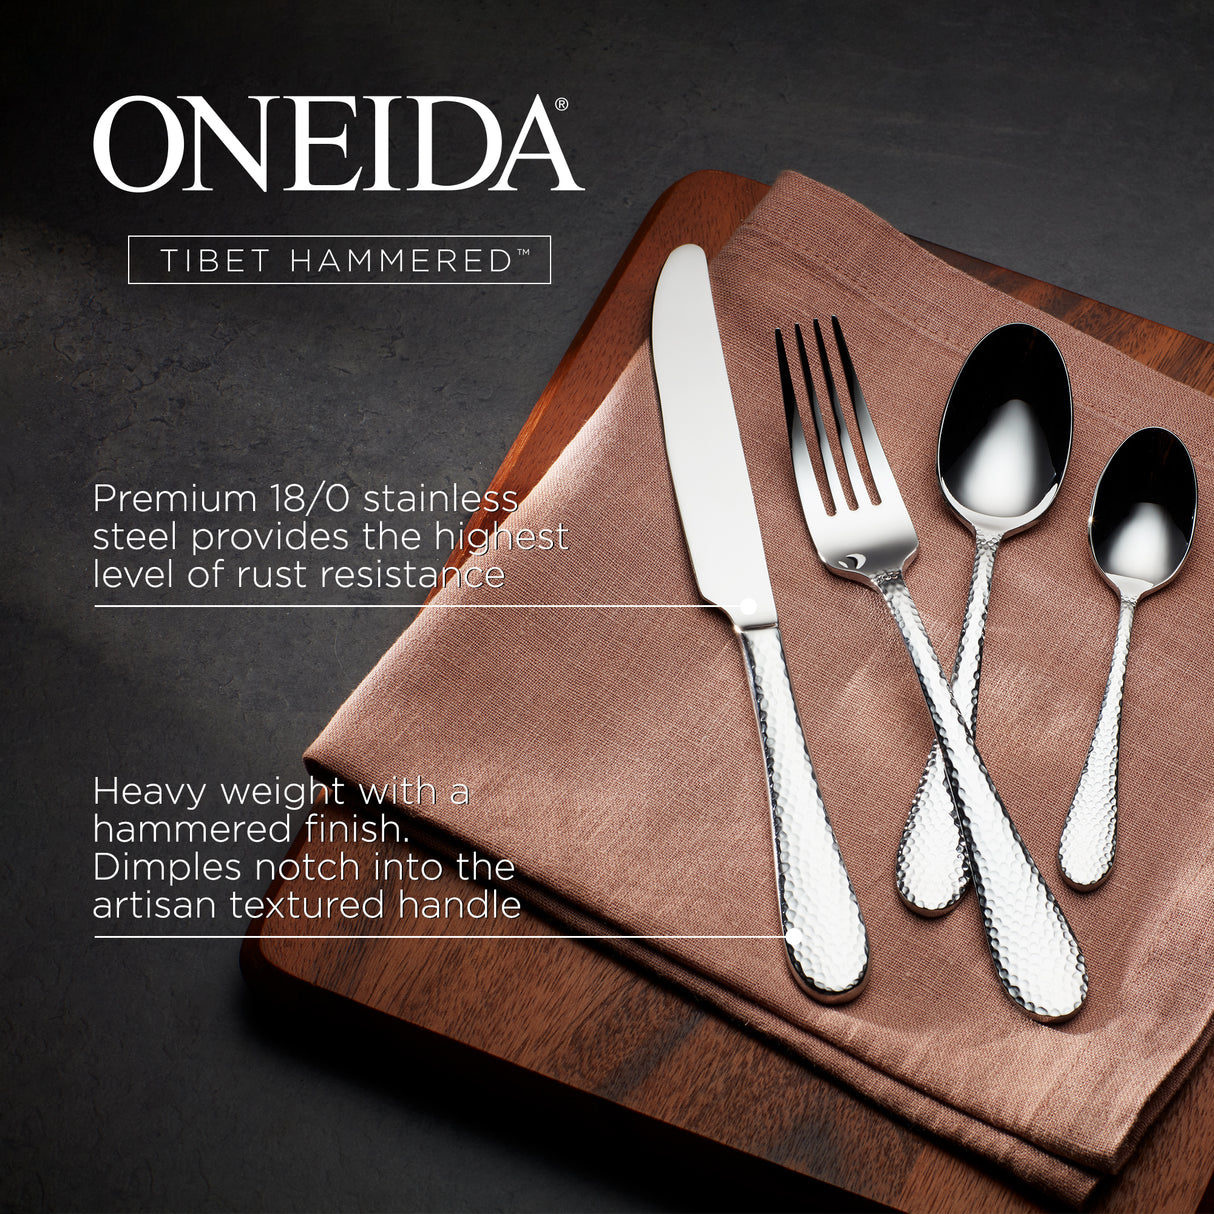 Oneida Tibet Cutlery Dinner Set for 4 - 16 Piece